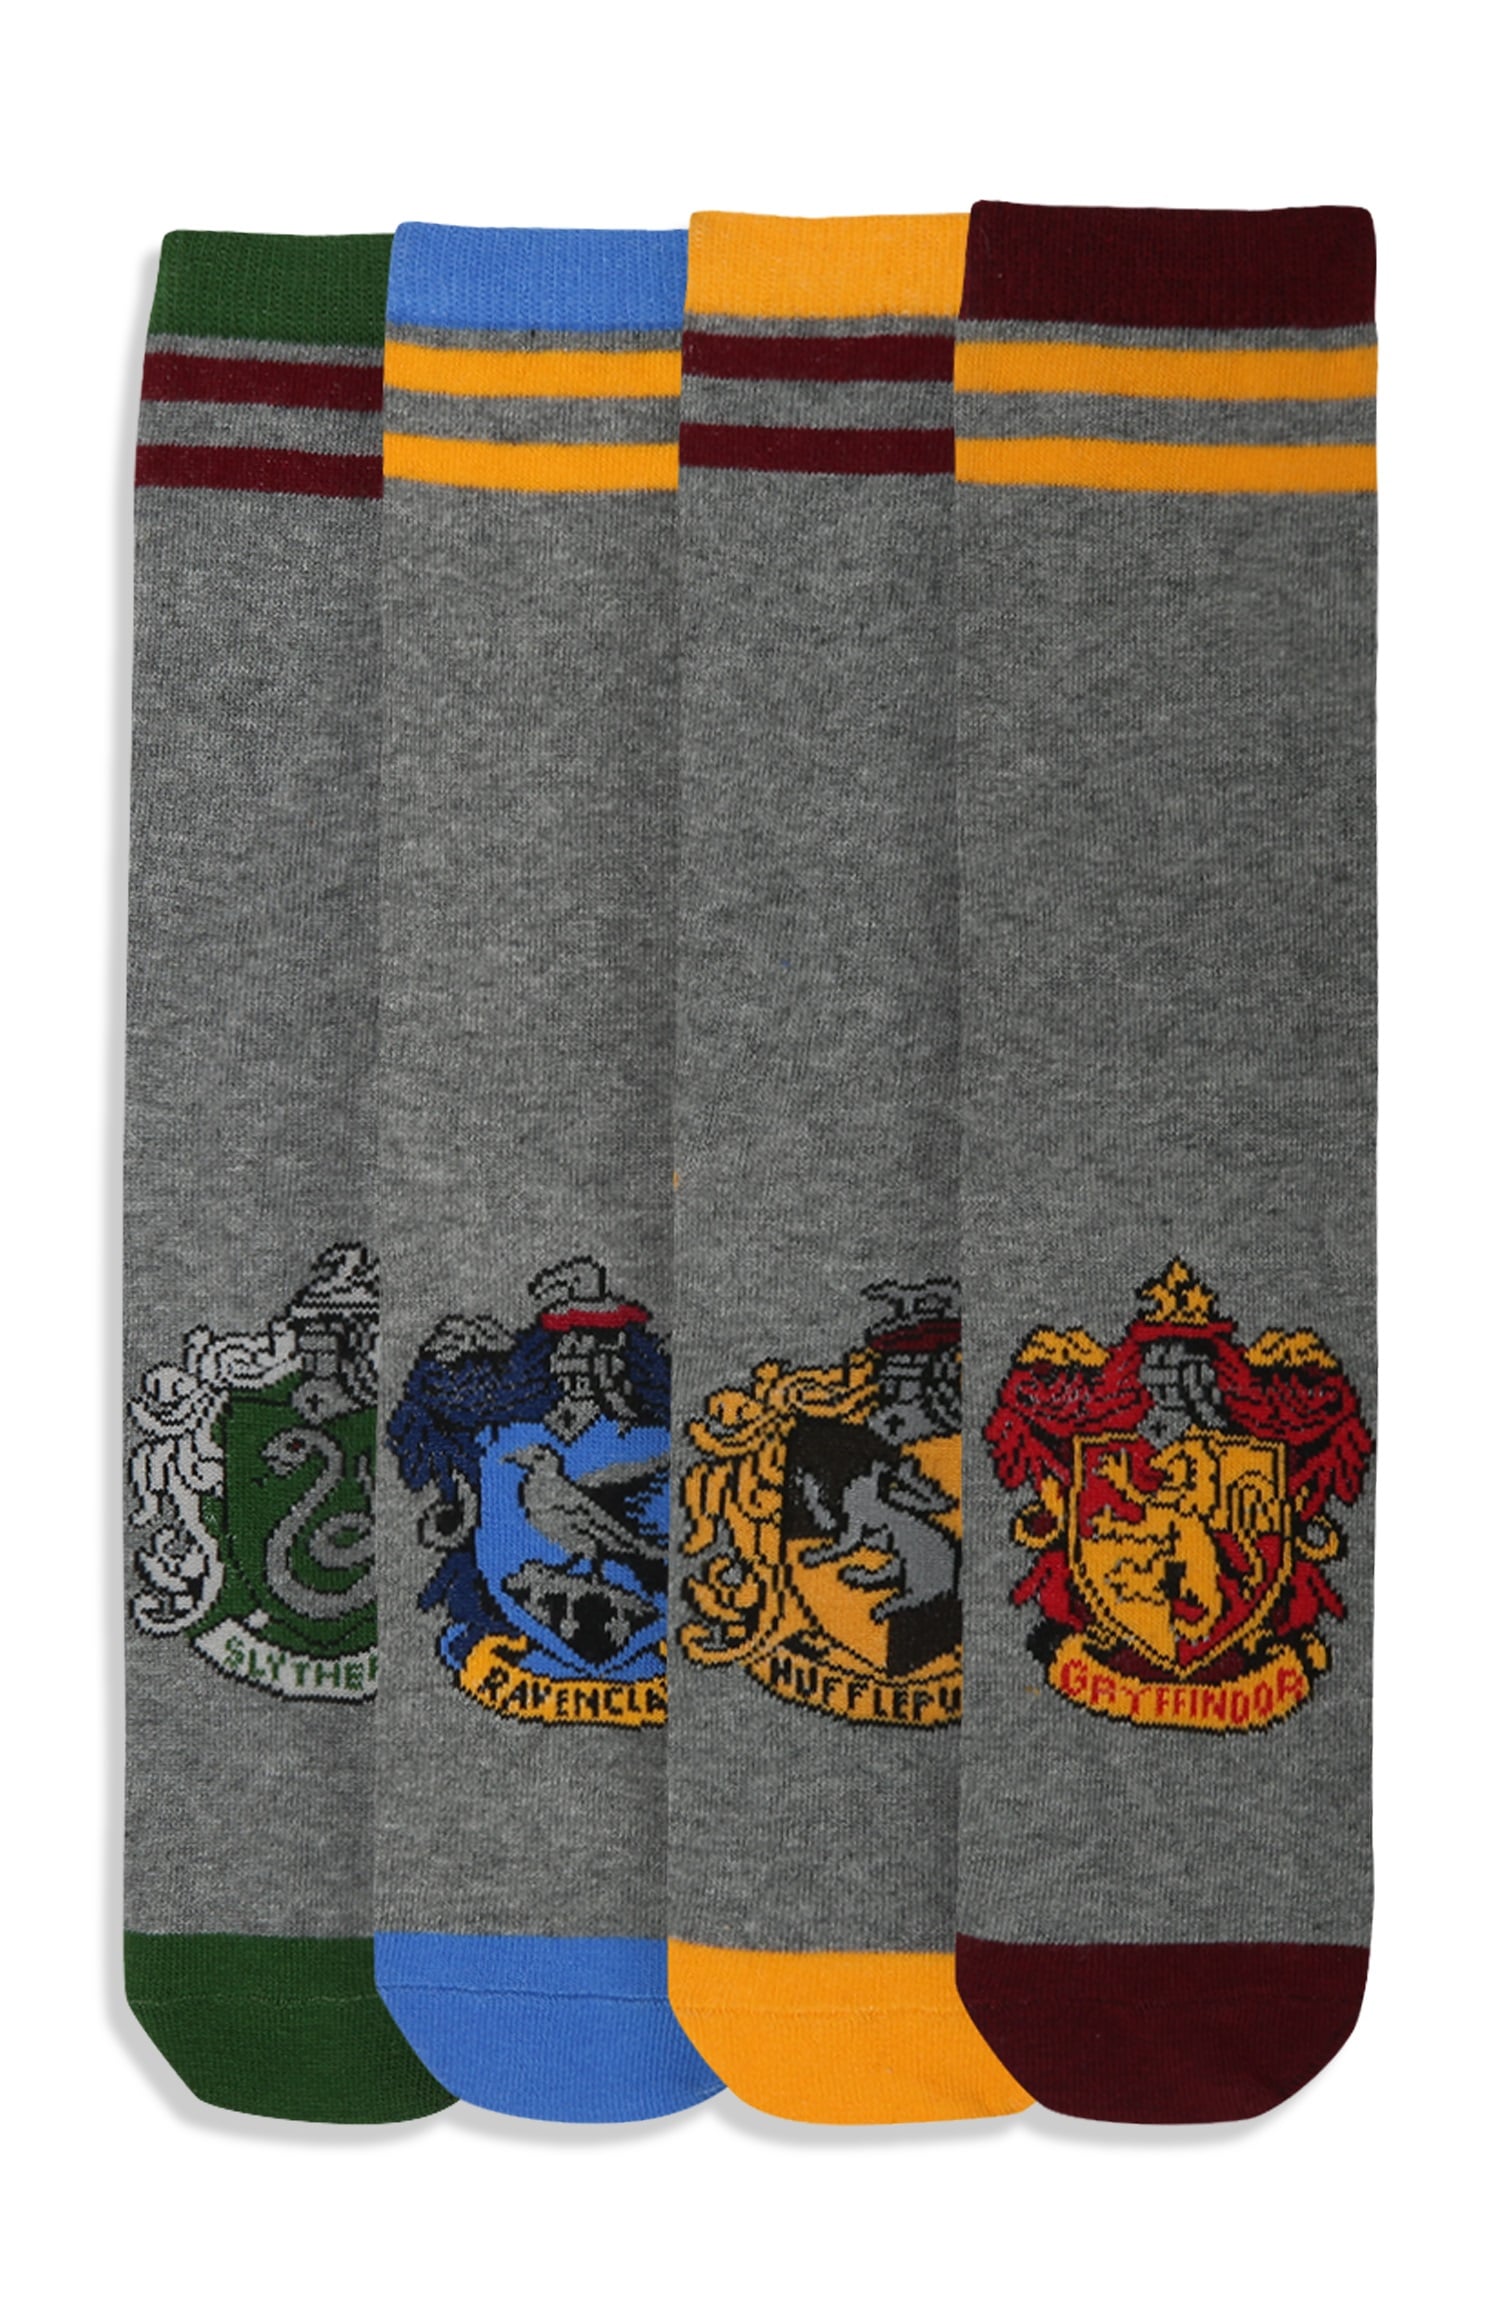 BRAND NEW Primark Harry Potter Hogwarts Houses Coasters Set of 4 